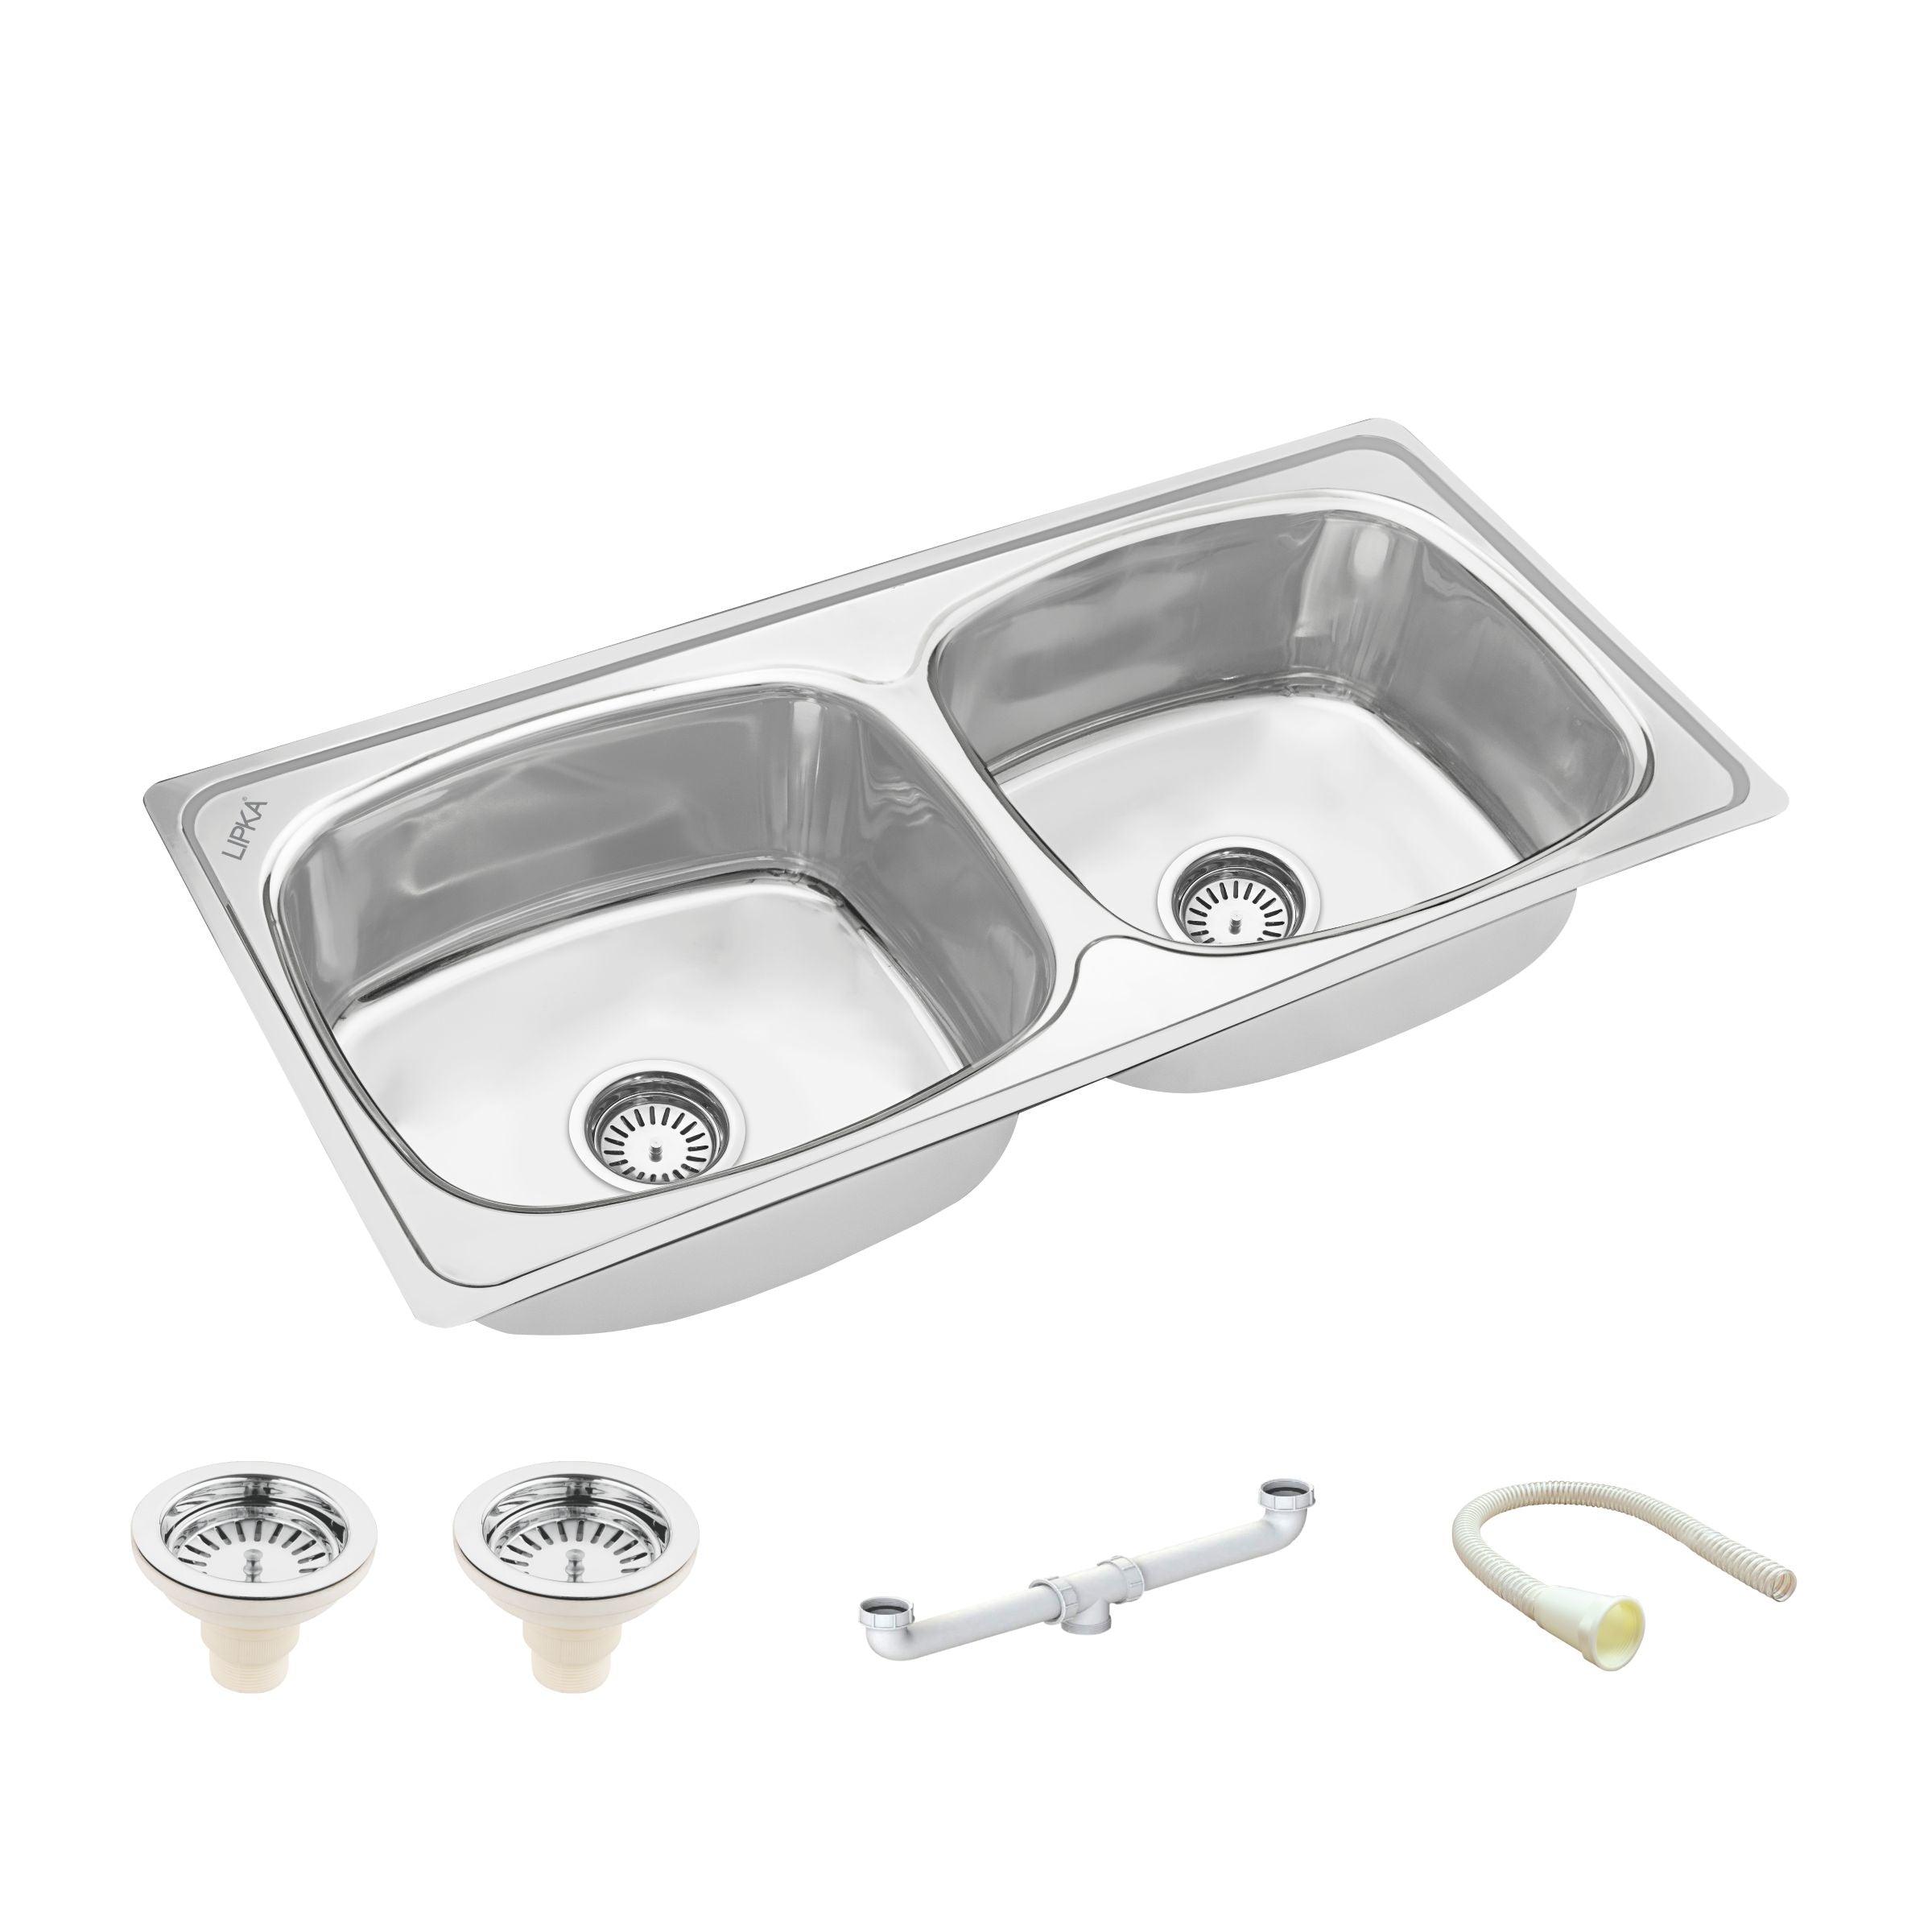 Round Double Bowl Kitchen Sink (45 x 20 x 9 Inches) - LIPKA - Lipka Home